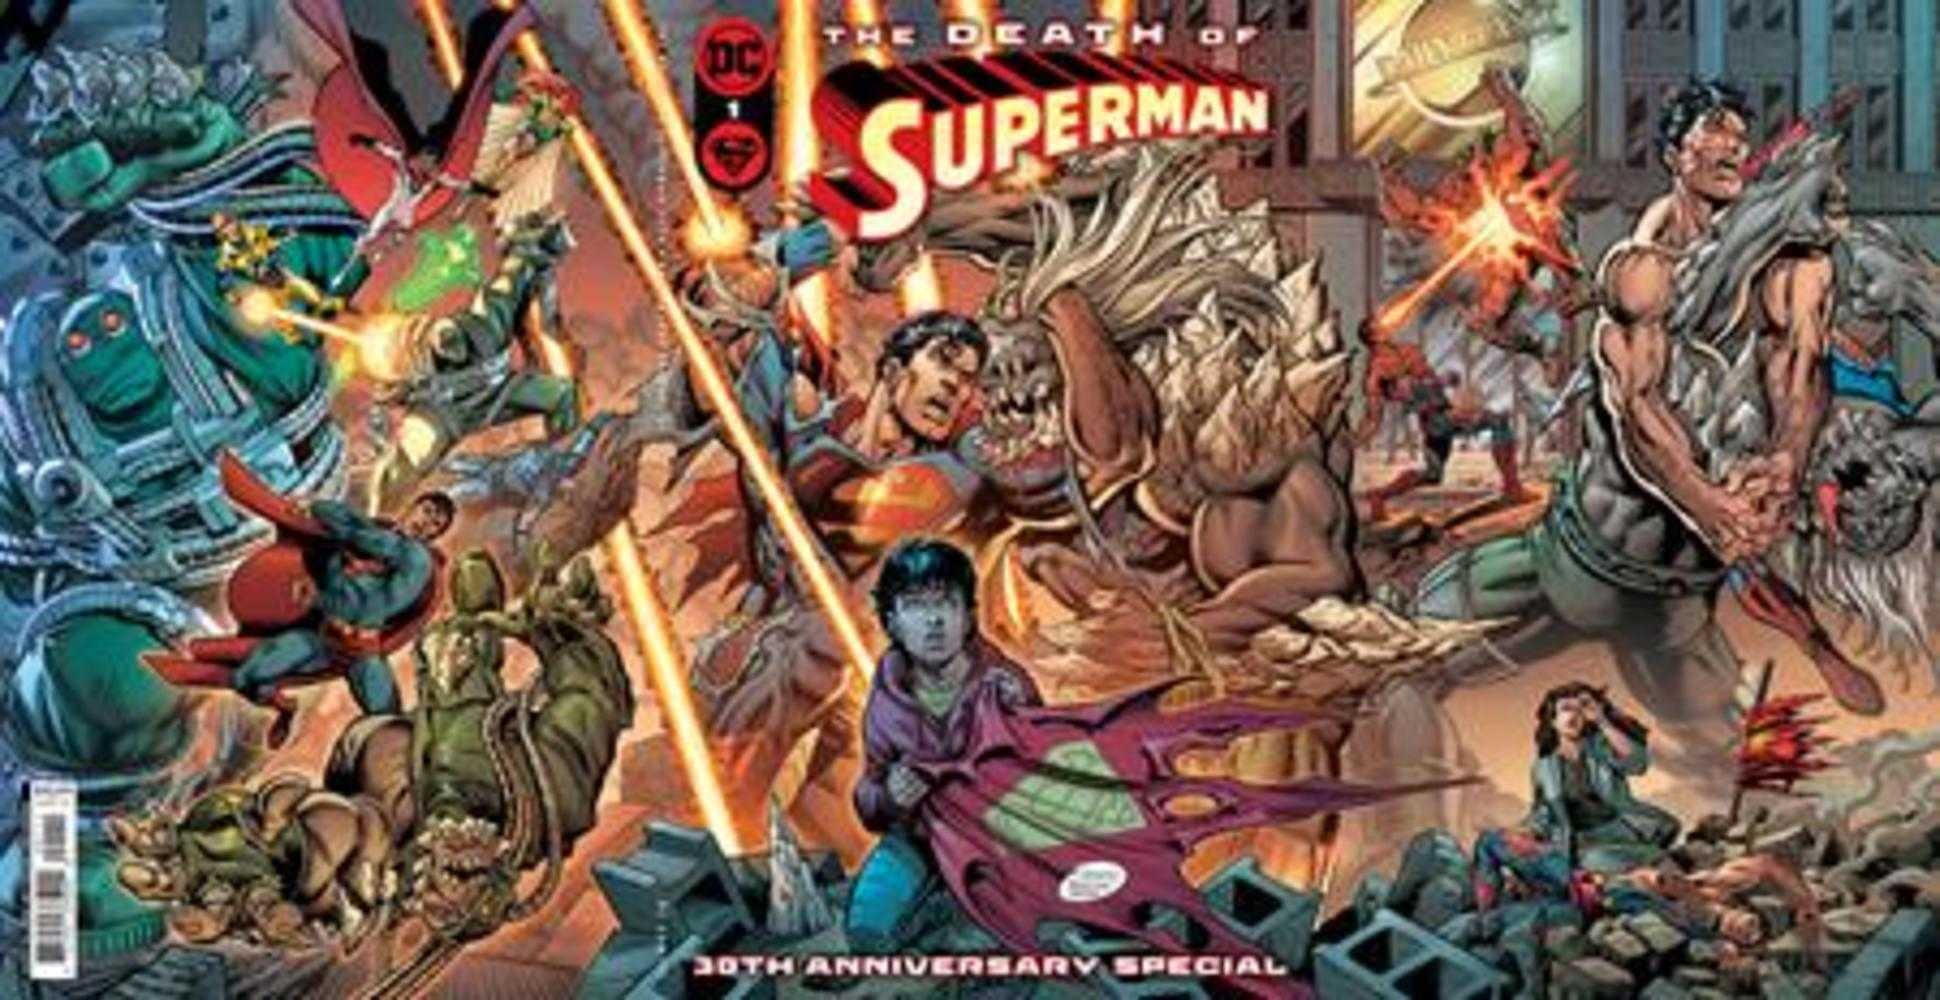 Death Of Superman 30th Anniversary Special #1 (One-Shot) Cover A Dan Jurgens & Brett Breeding Gatefold Cover | Game Master's Emporium (The New GME)